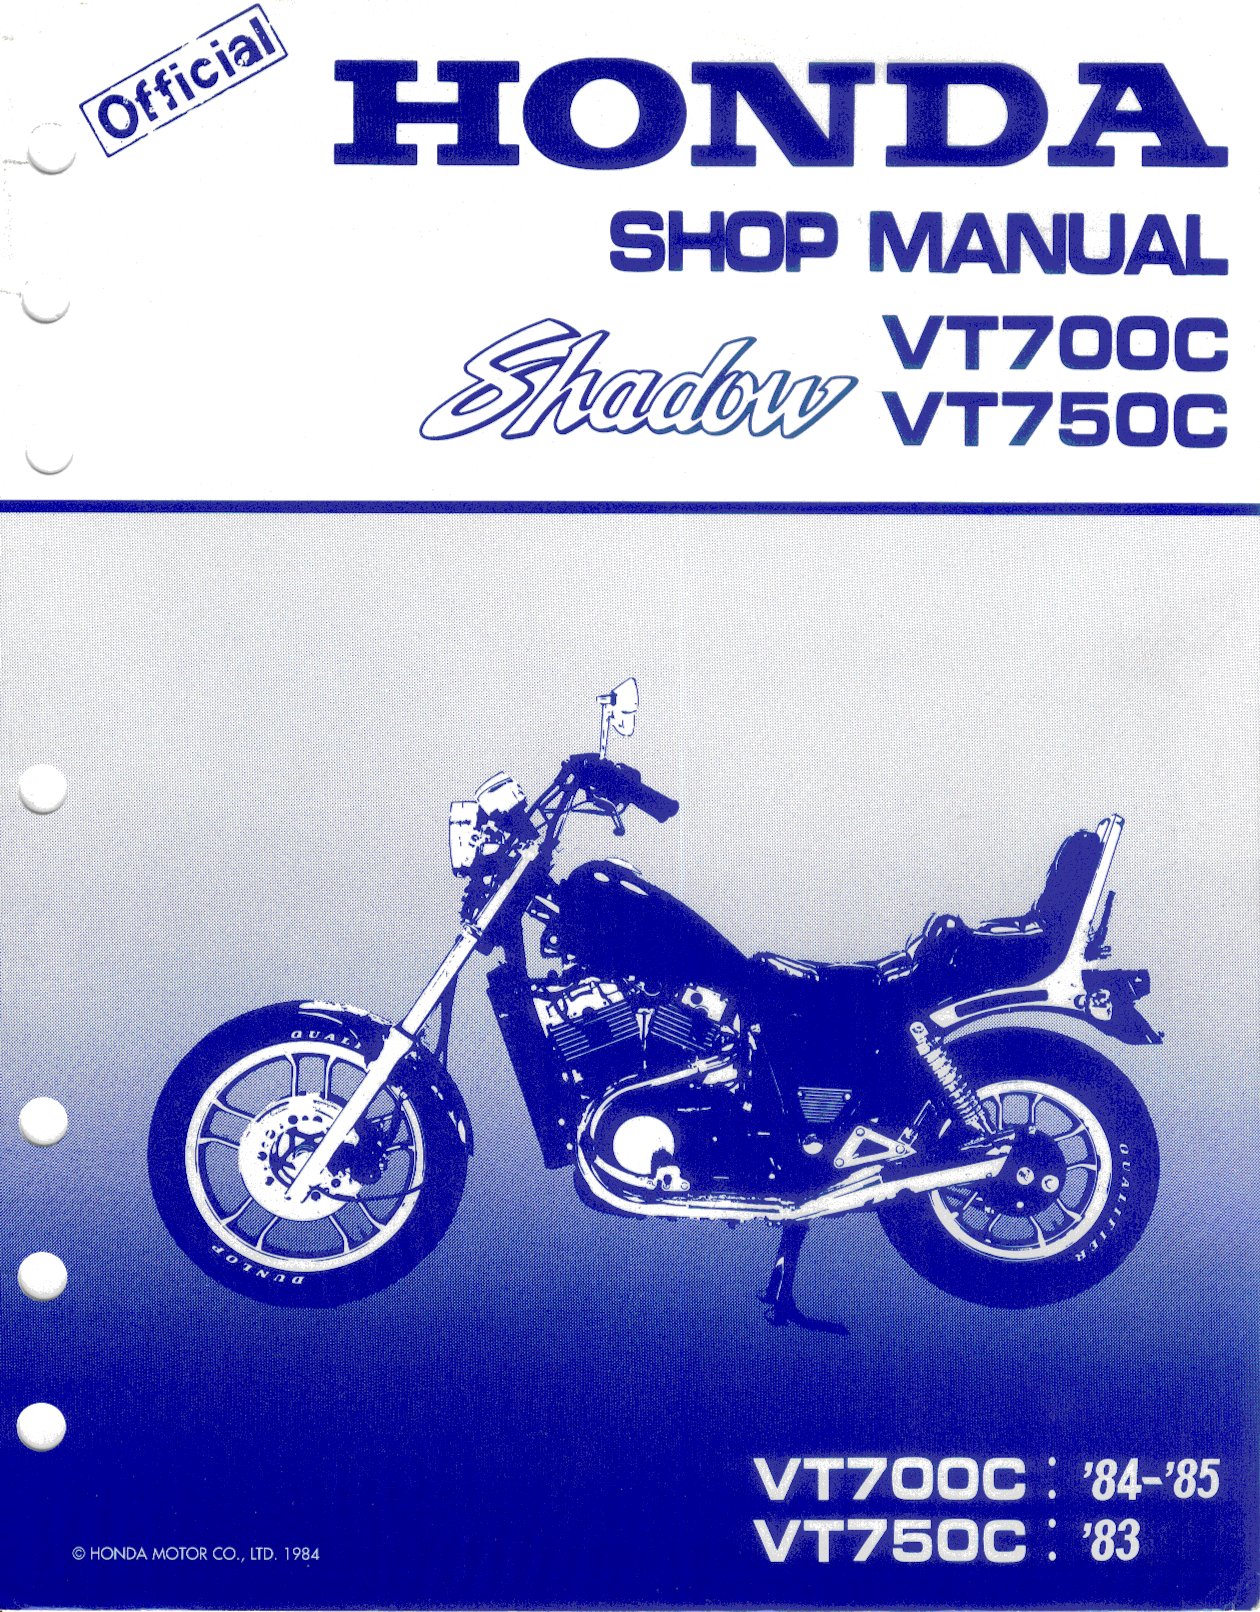 1983-1985 Honda VT750C Shadow shop manual Preview image 6